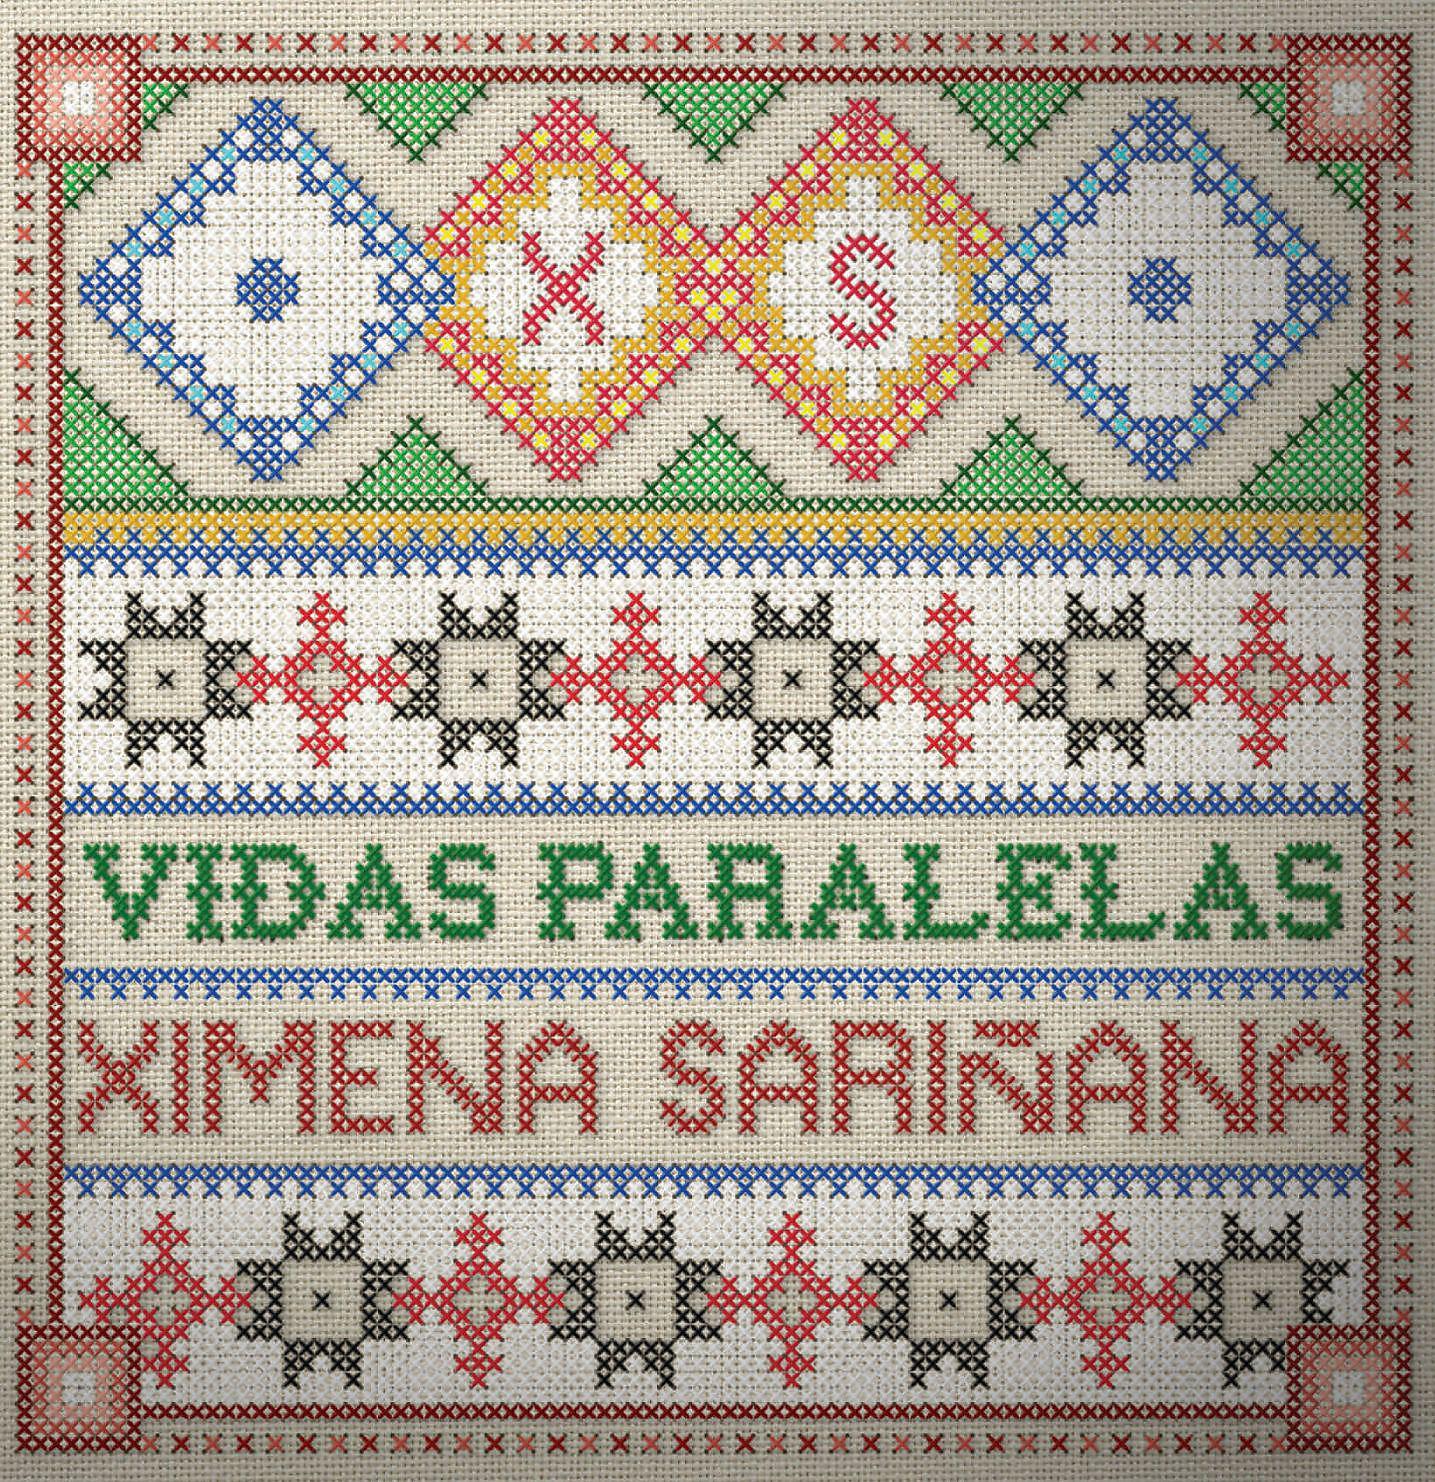 Постер альбома Vidas Paralelas